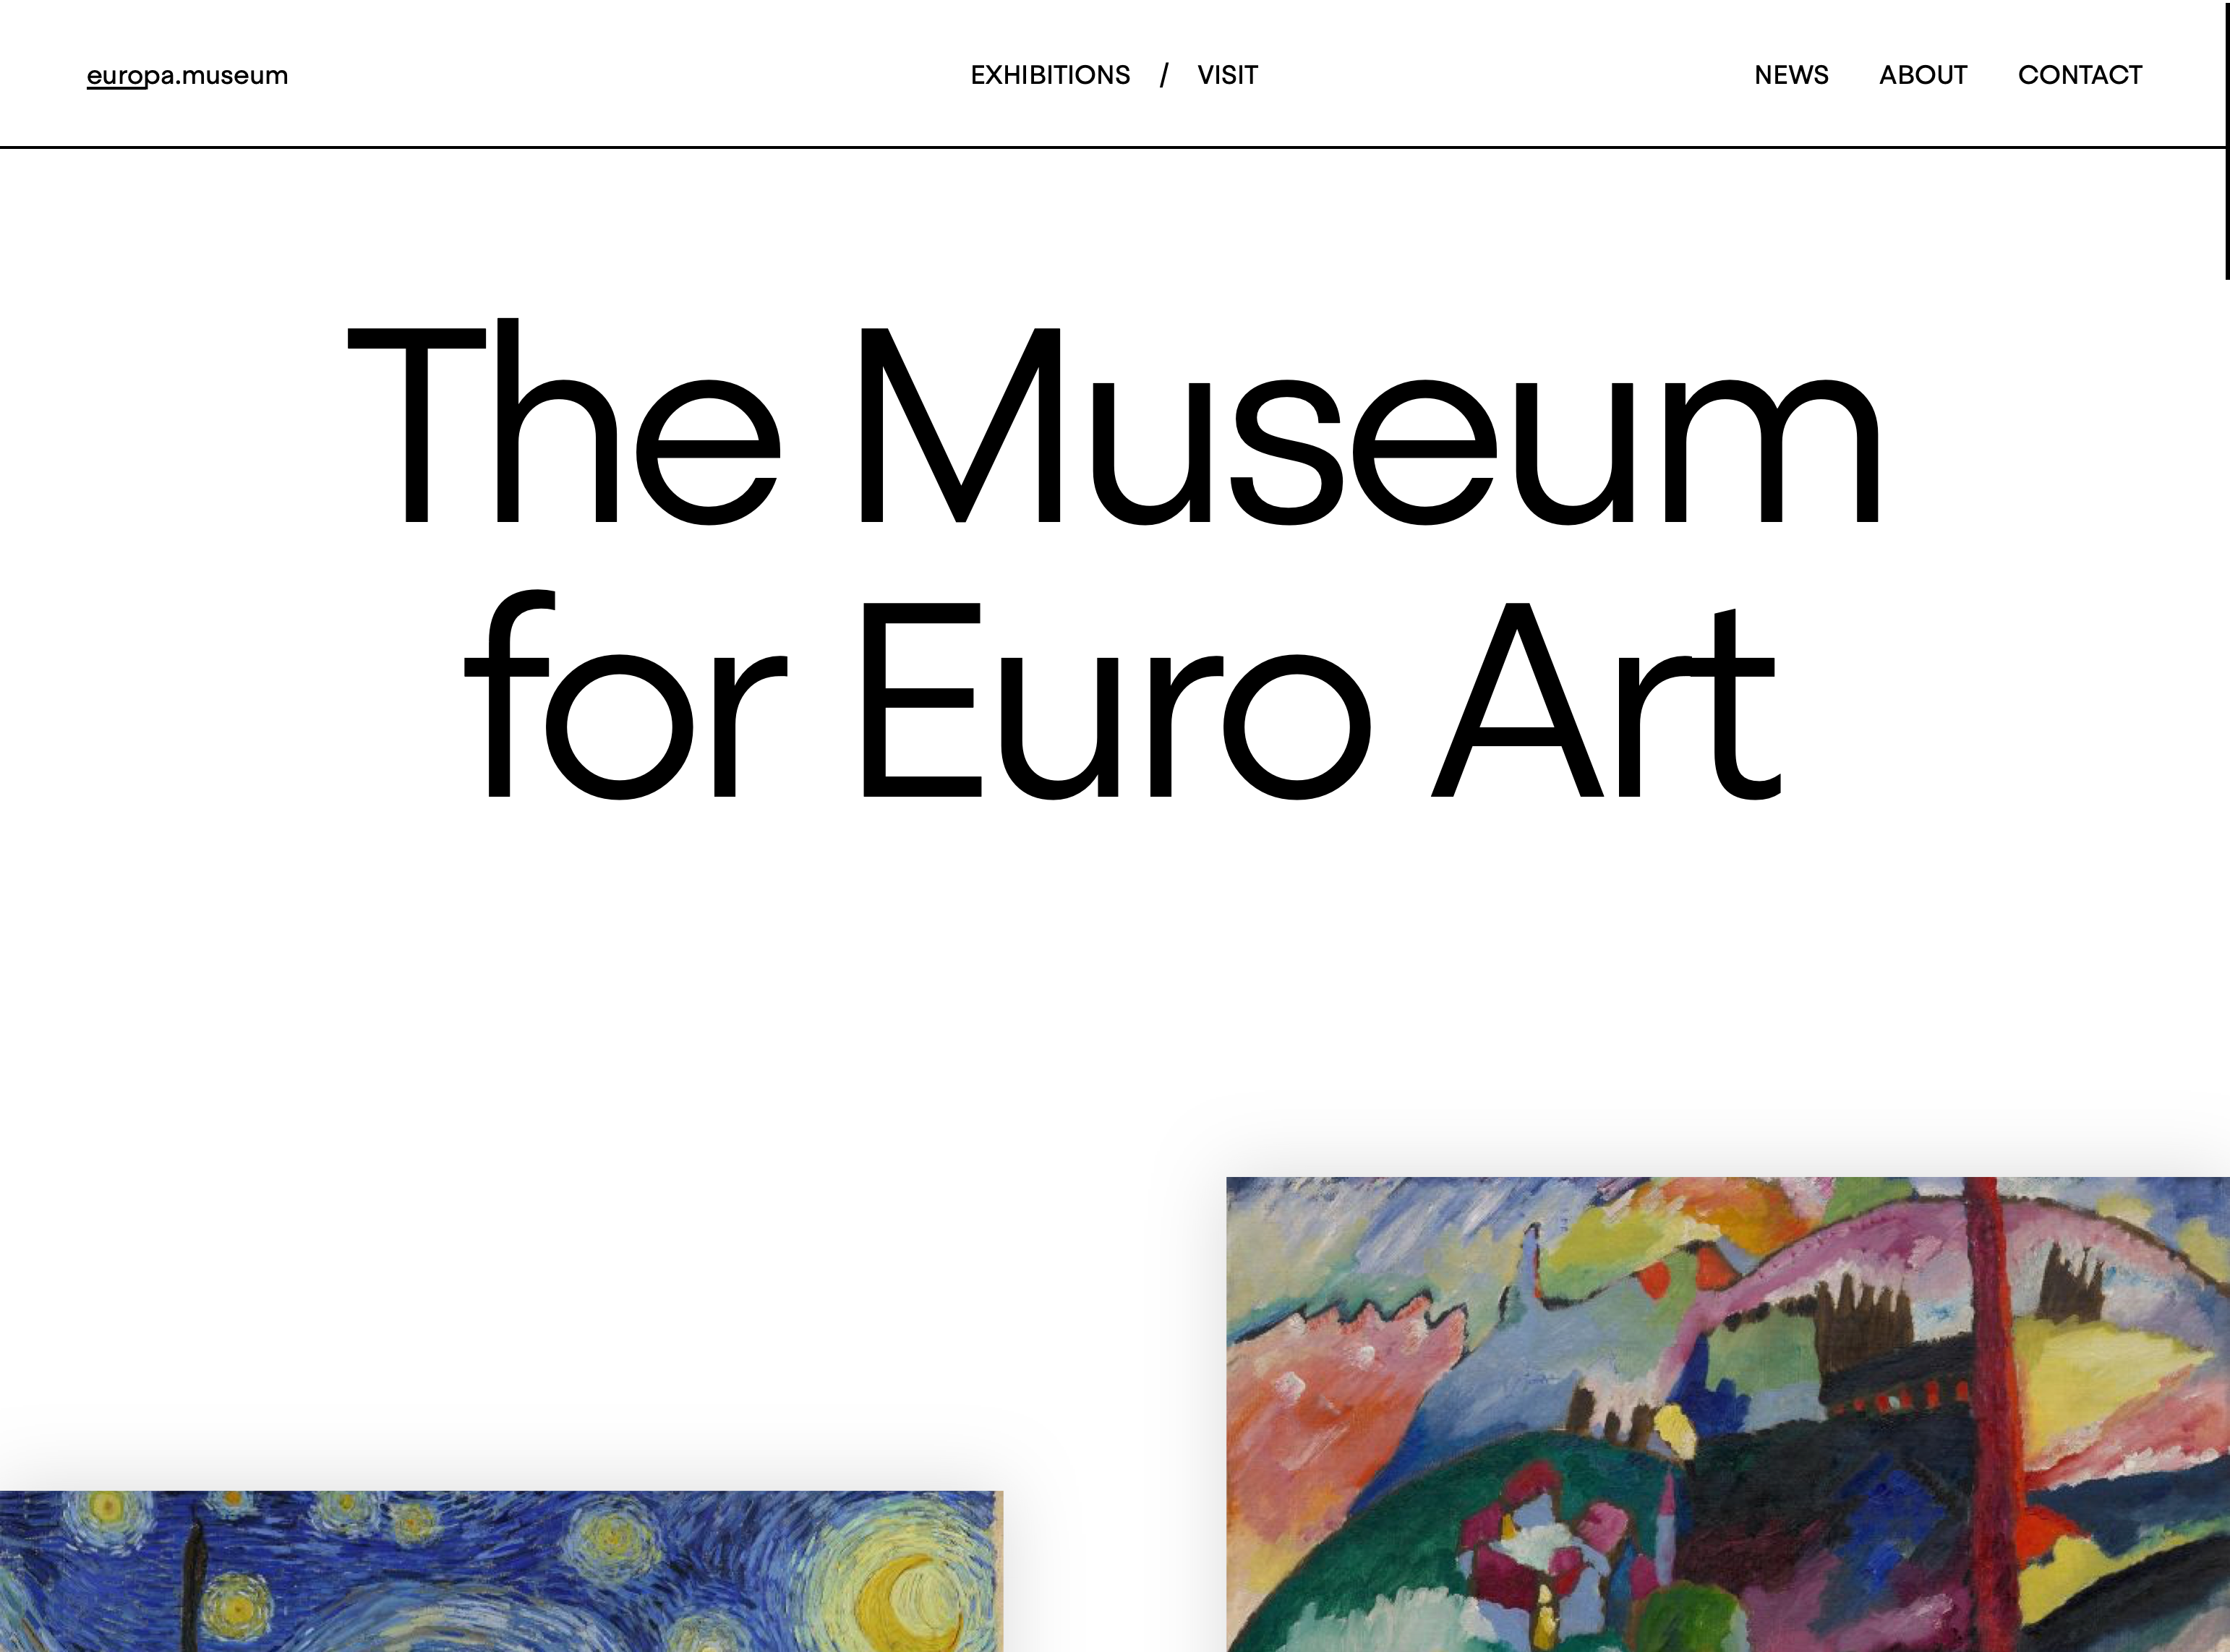 Europa Museum homepage